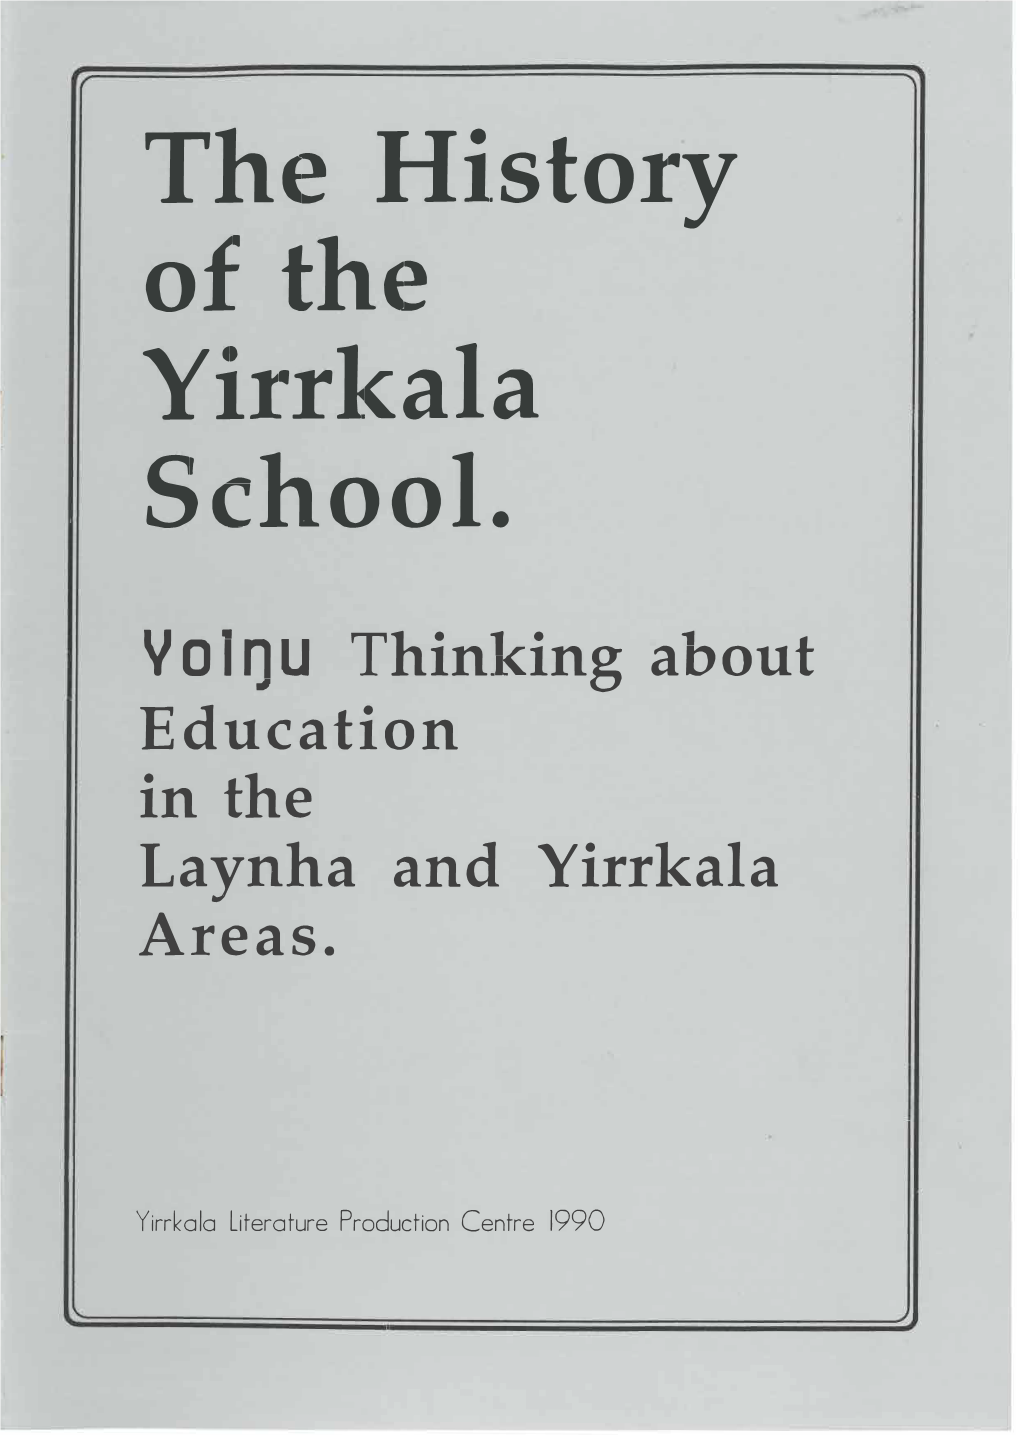 The History of the Yirrkala School